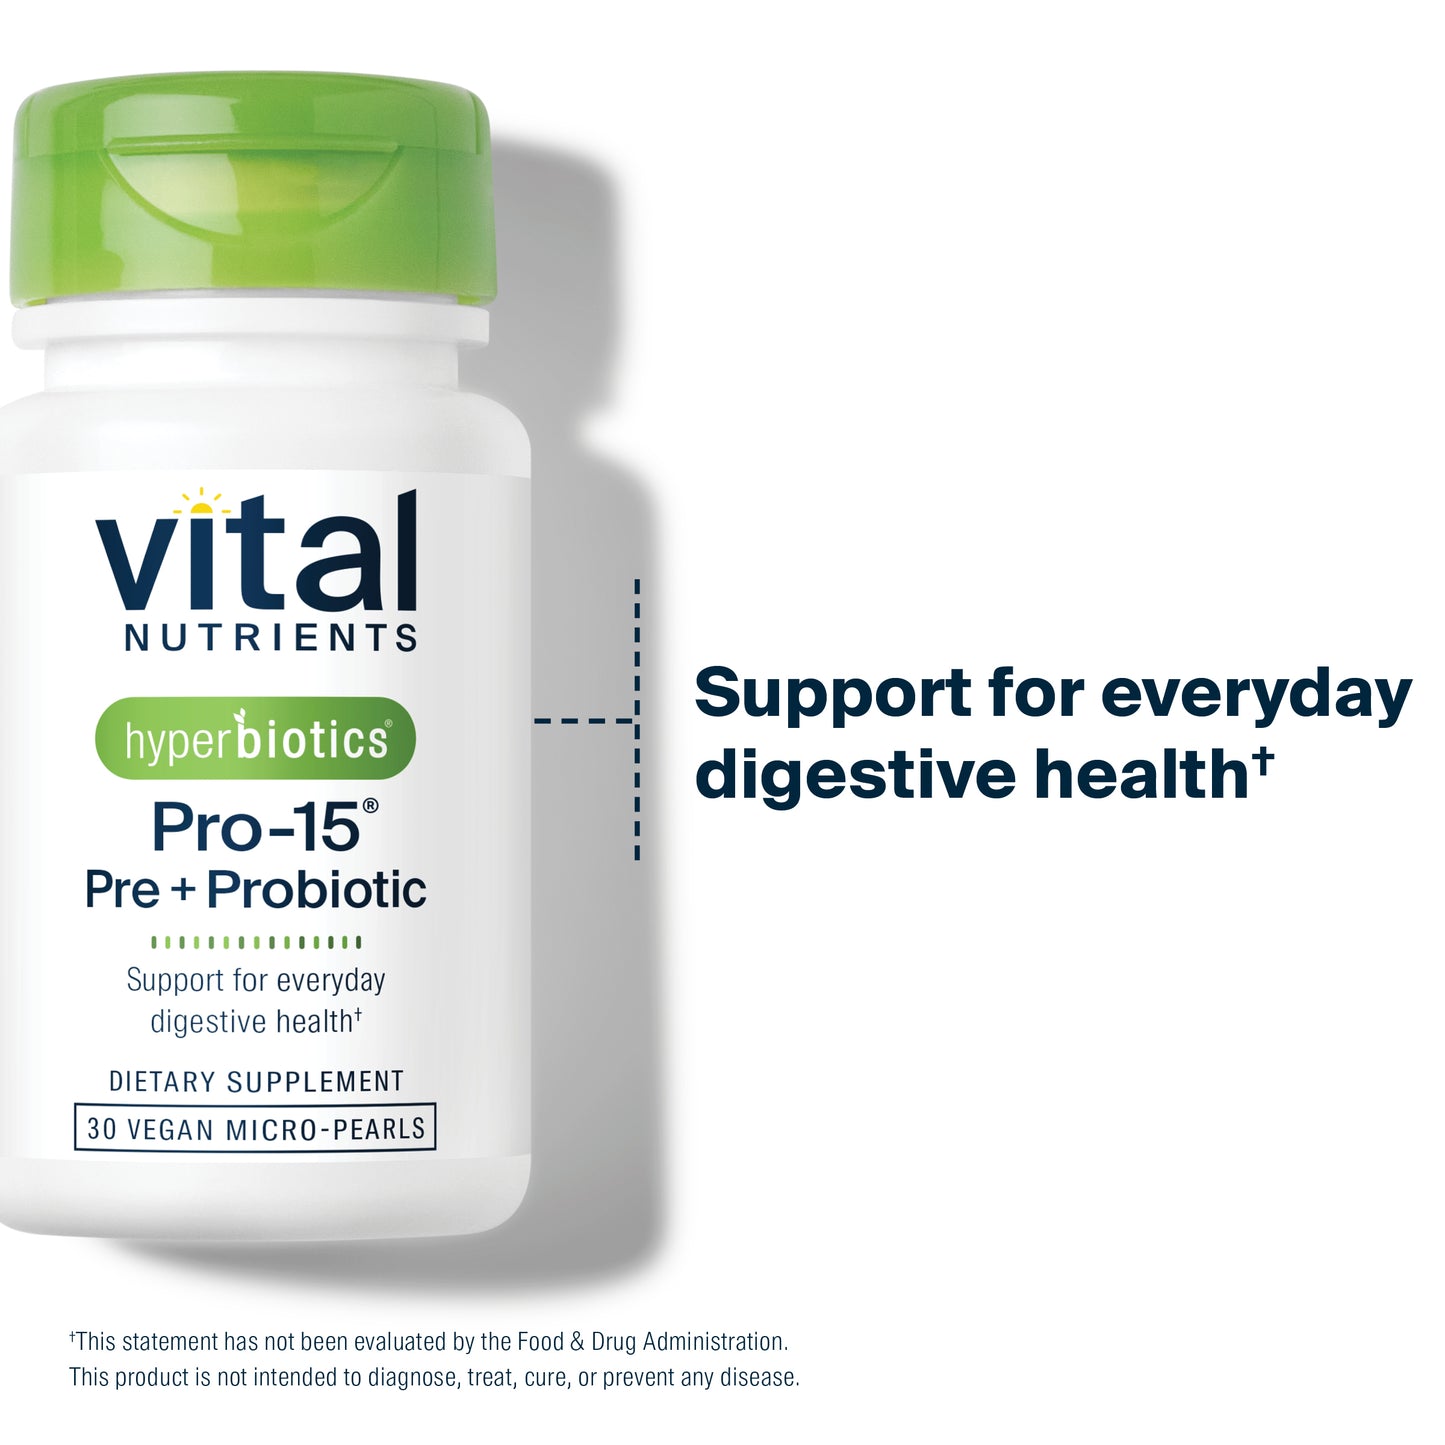 Hyperbiotics Pro-15 Pre+Probiotic 30 vegan micro-pearls support for everyday gut health.*